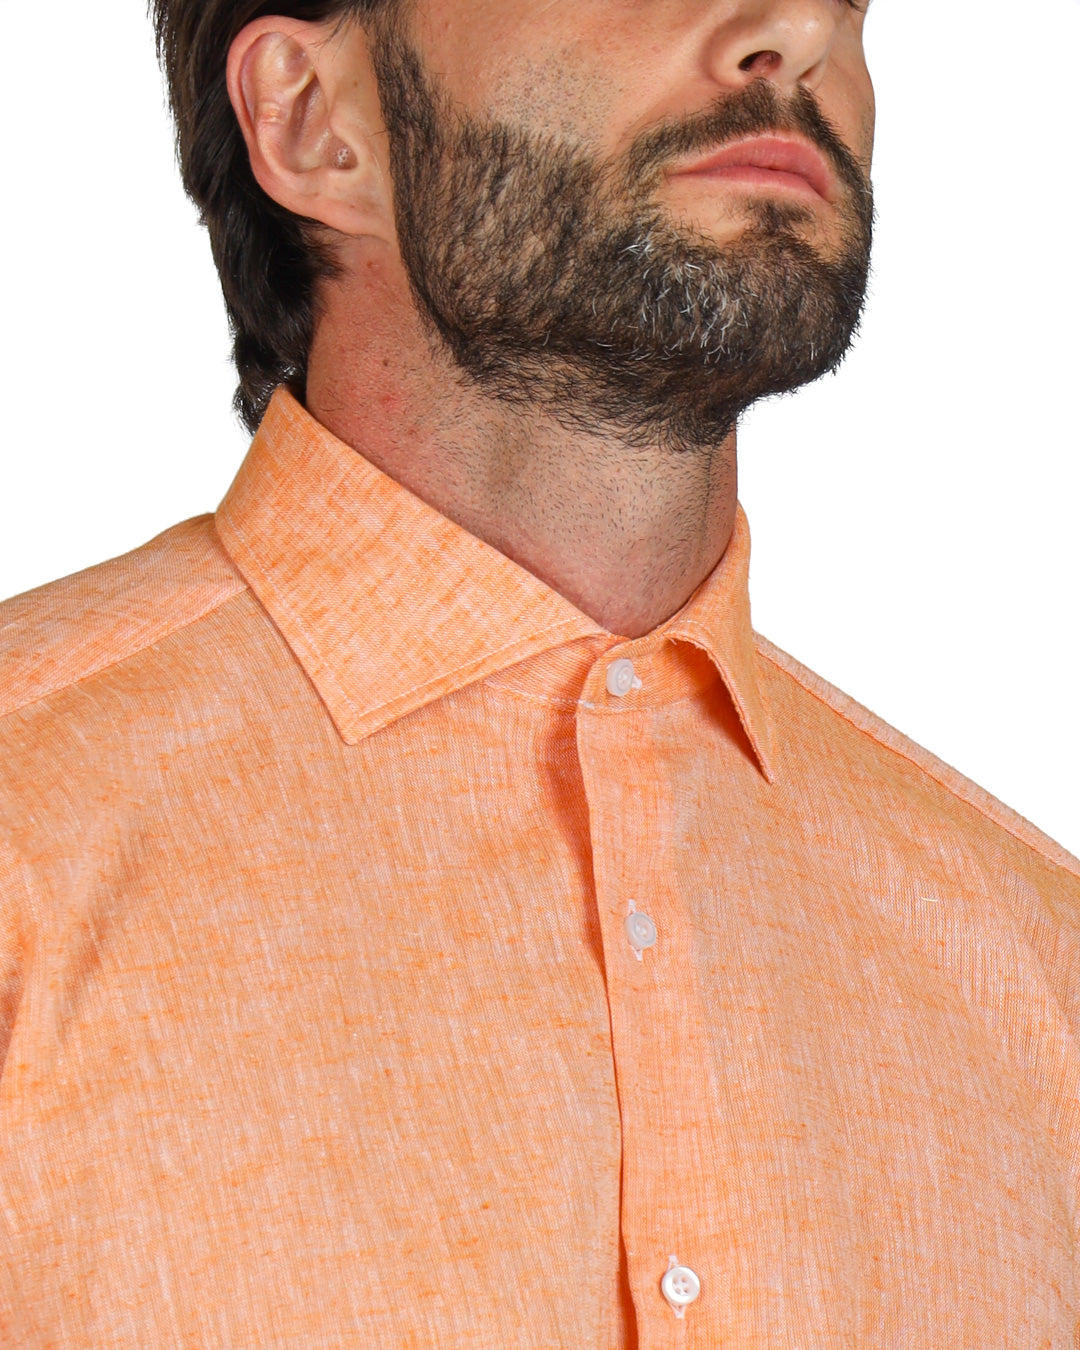 Praiano - Classic orange linen shirt